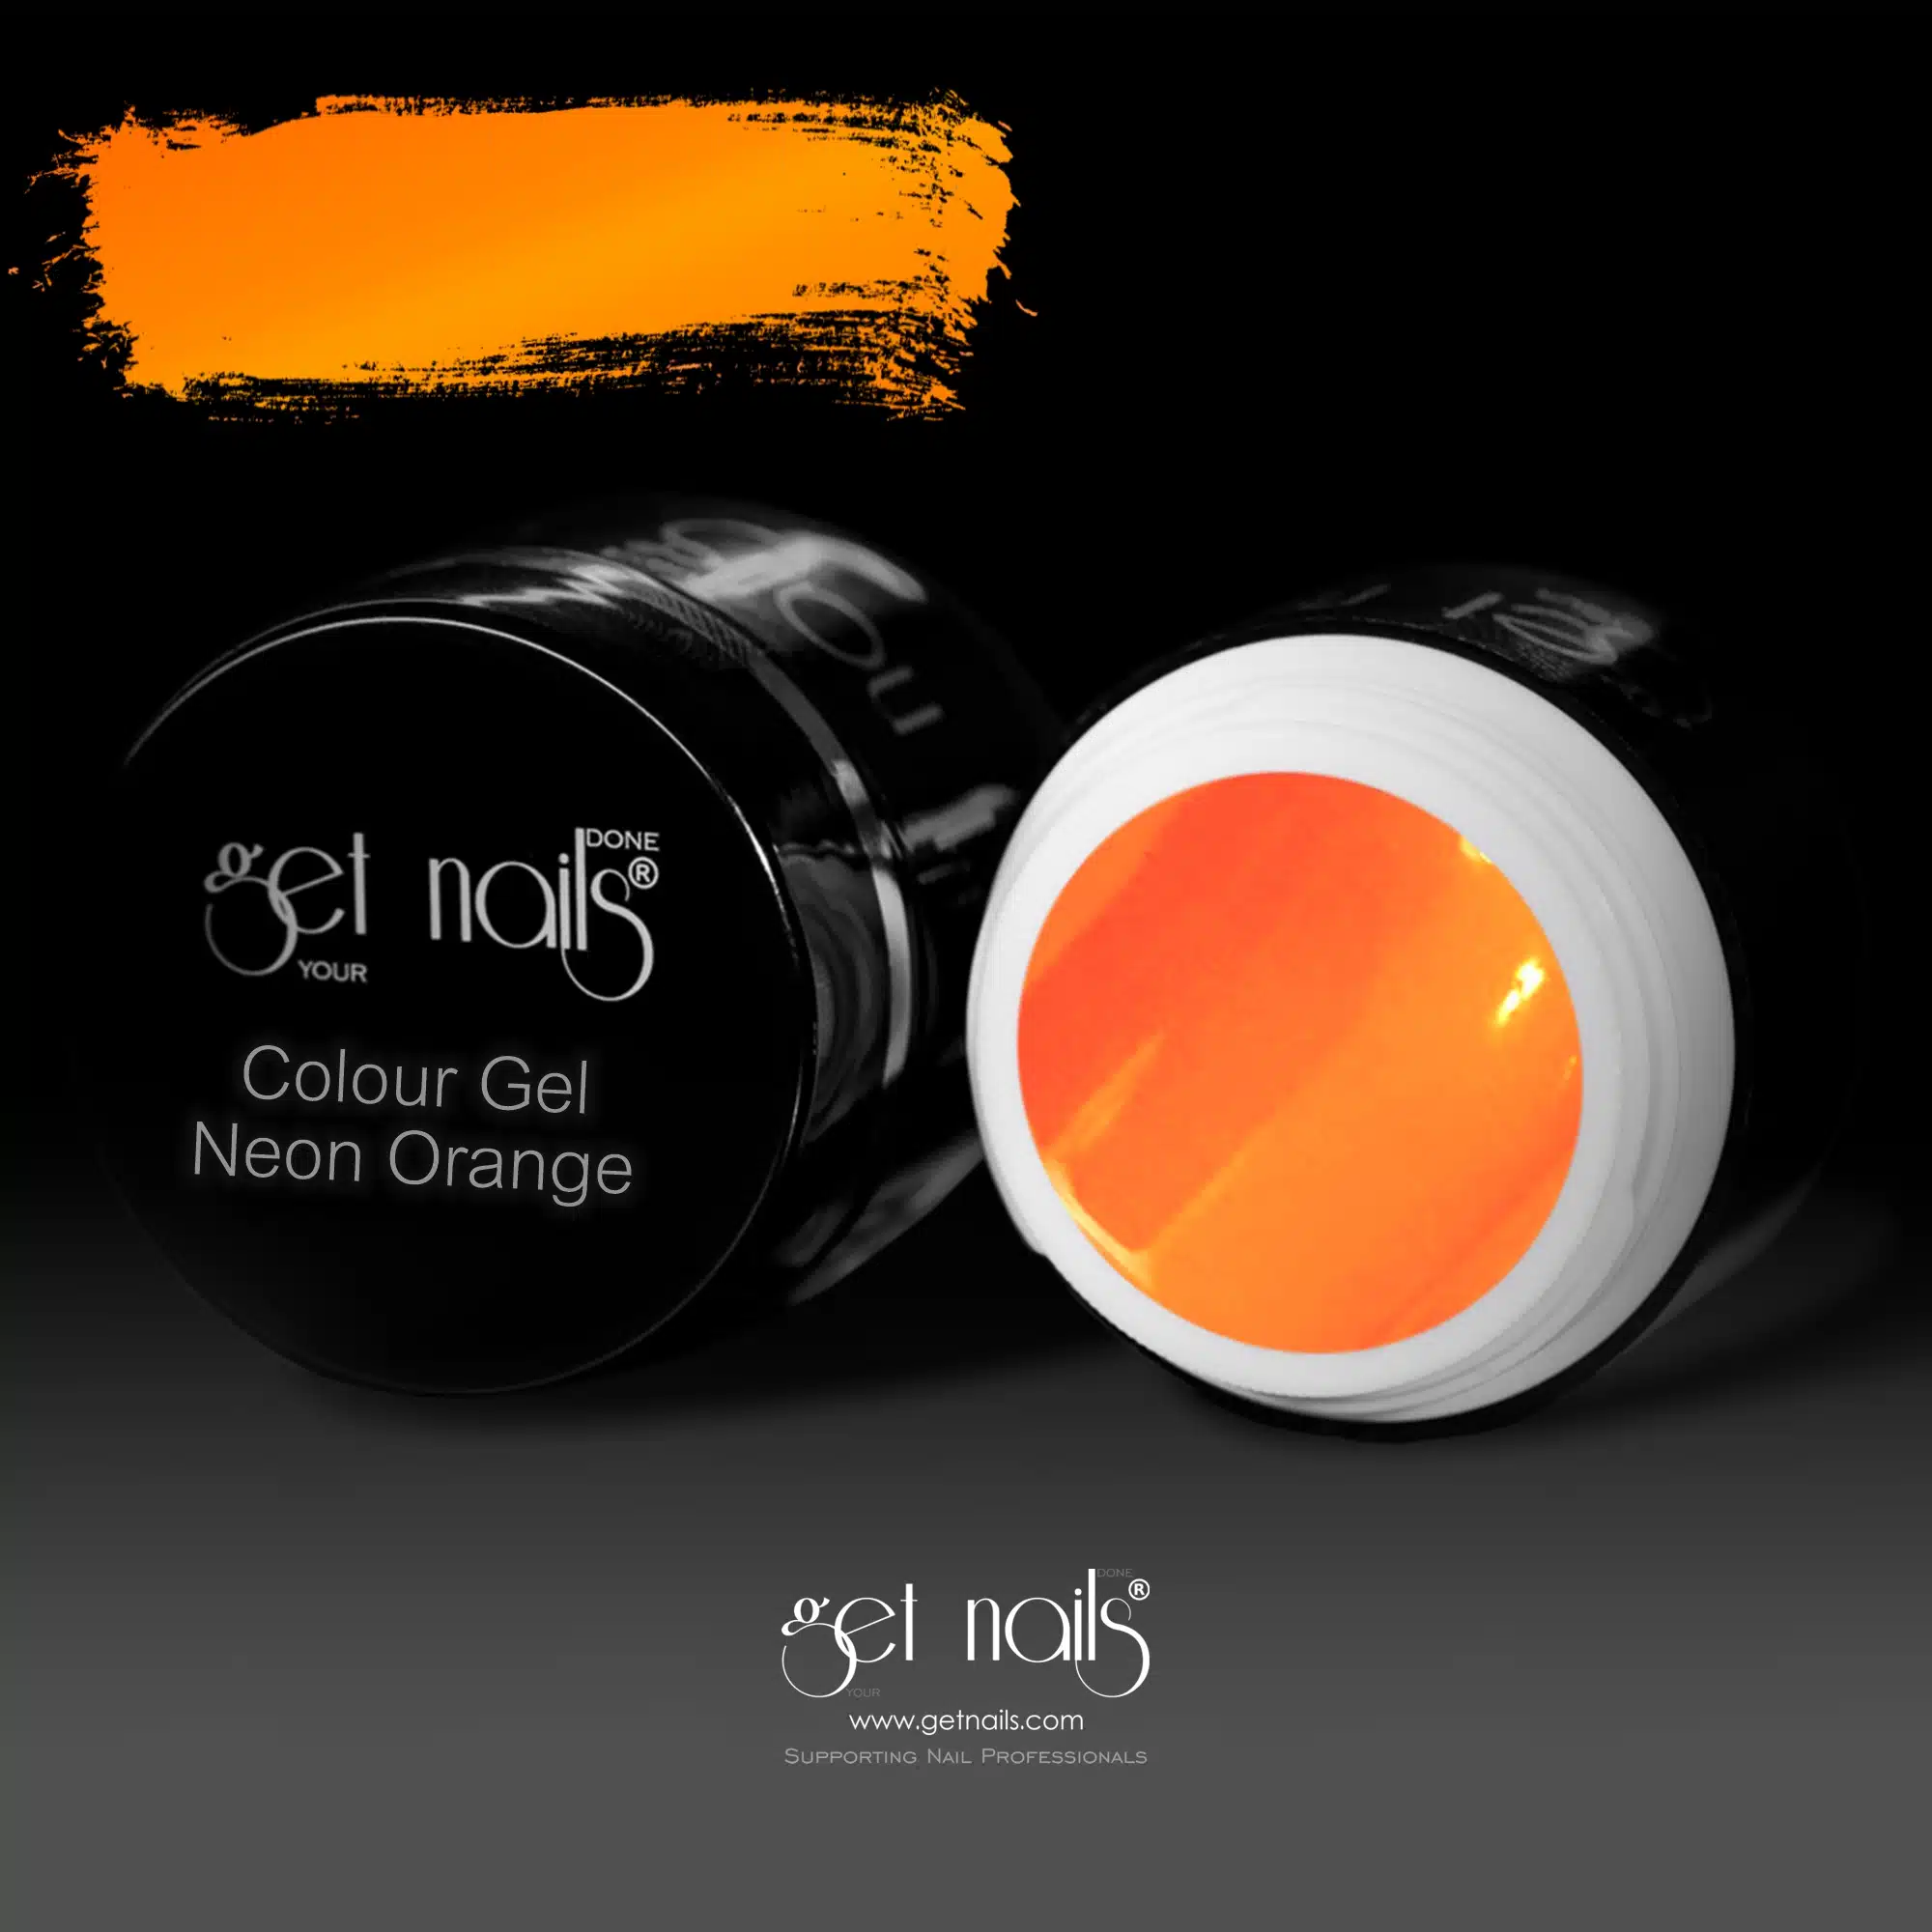 Get Nails Austria - Color Gel Neon Orange 5g